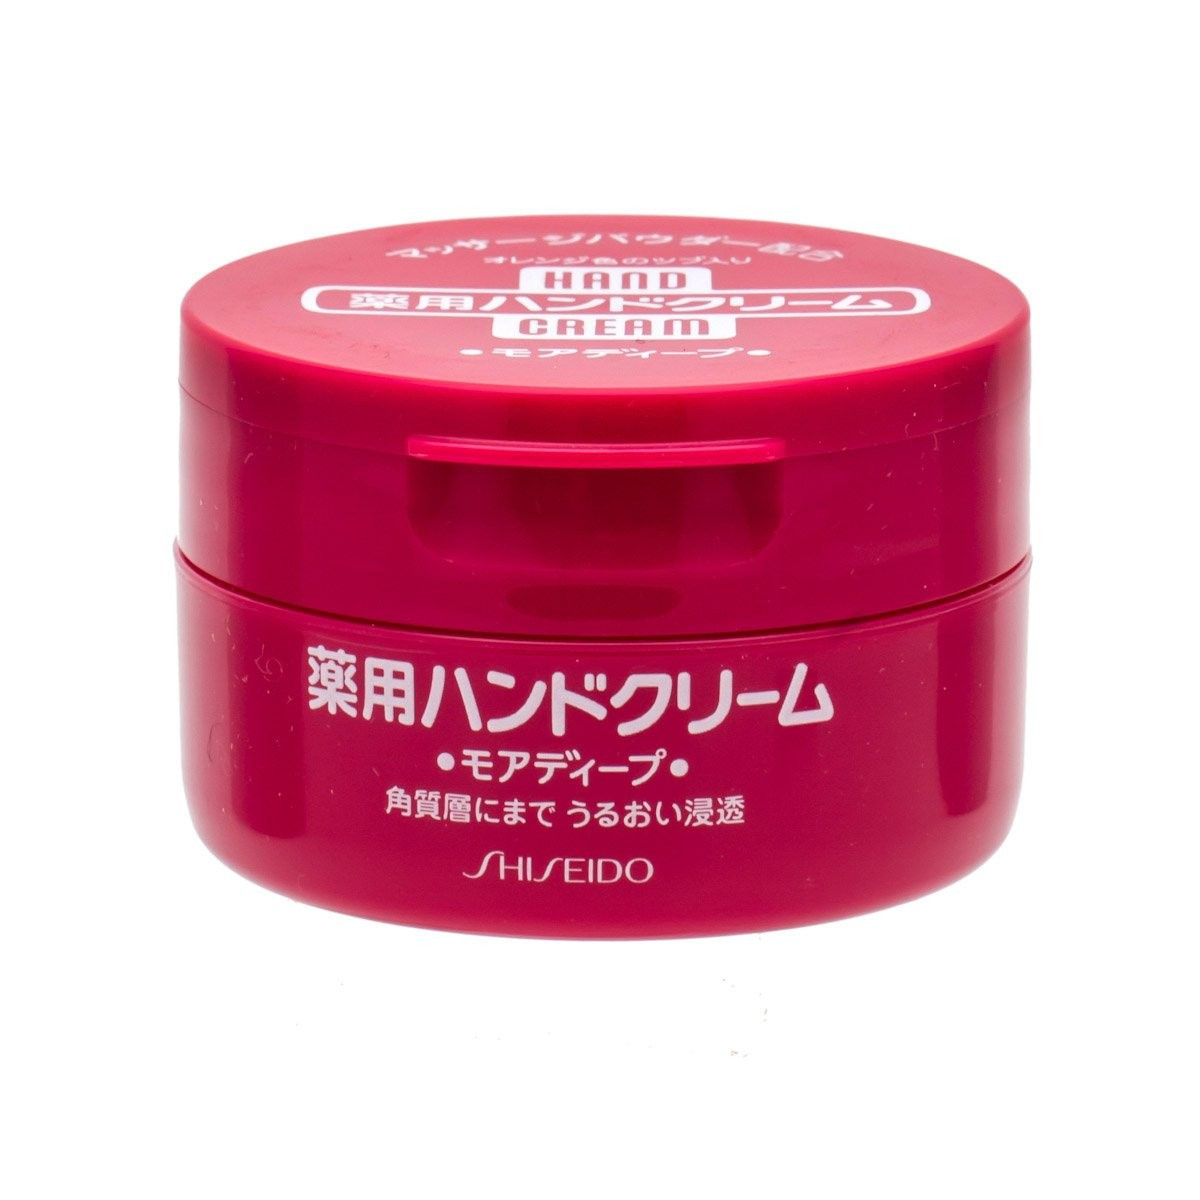 data-shiseido-urea-hand-cream-red-can